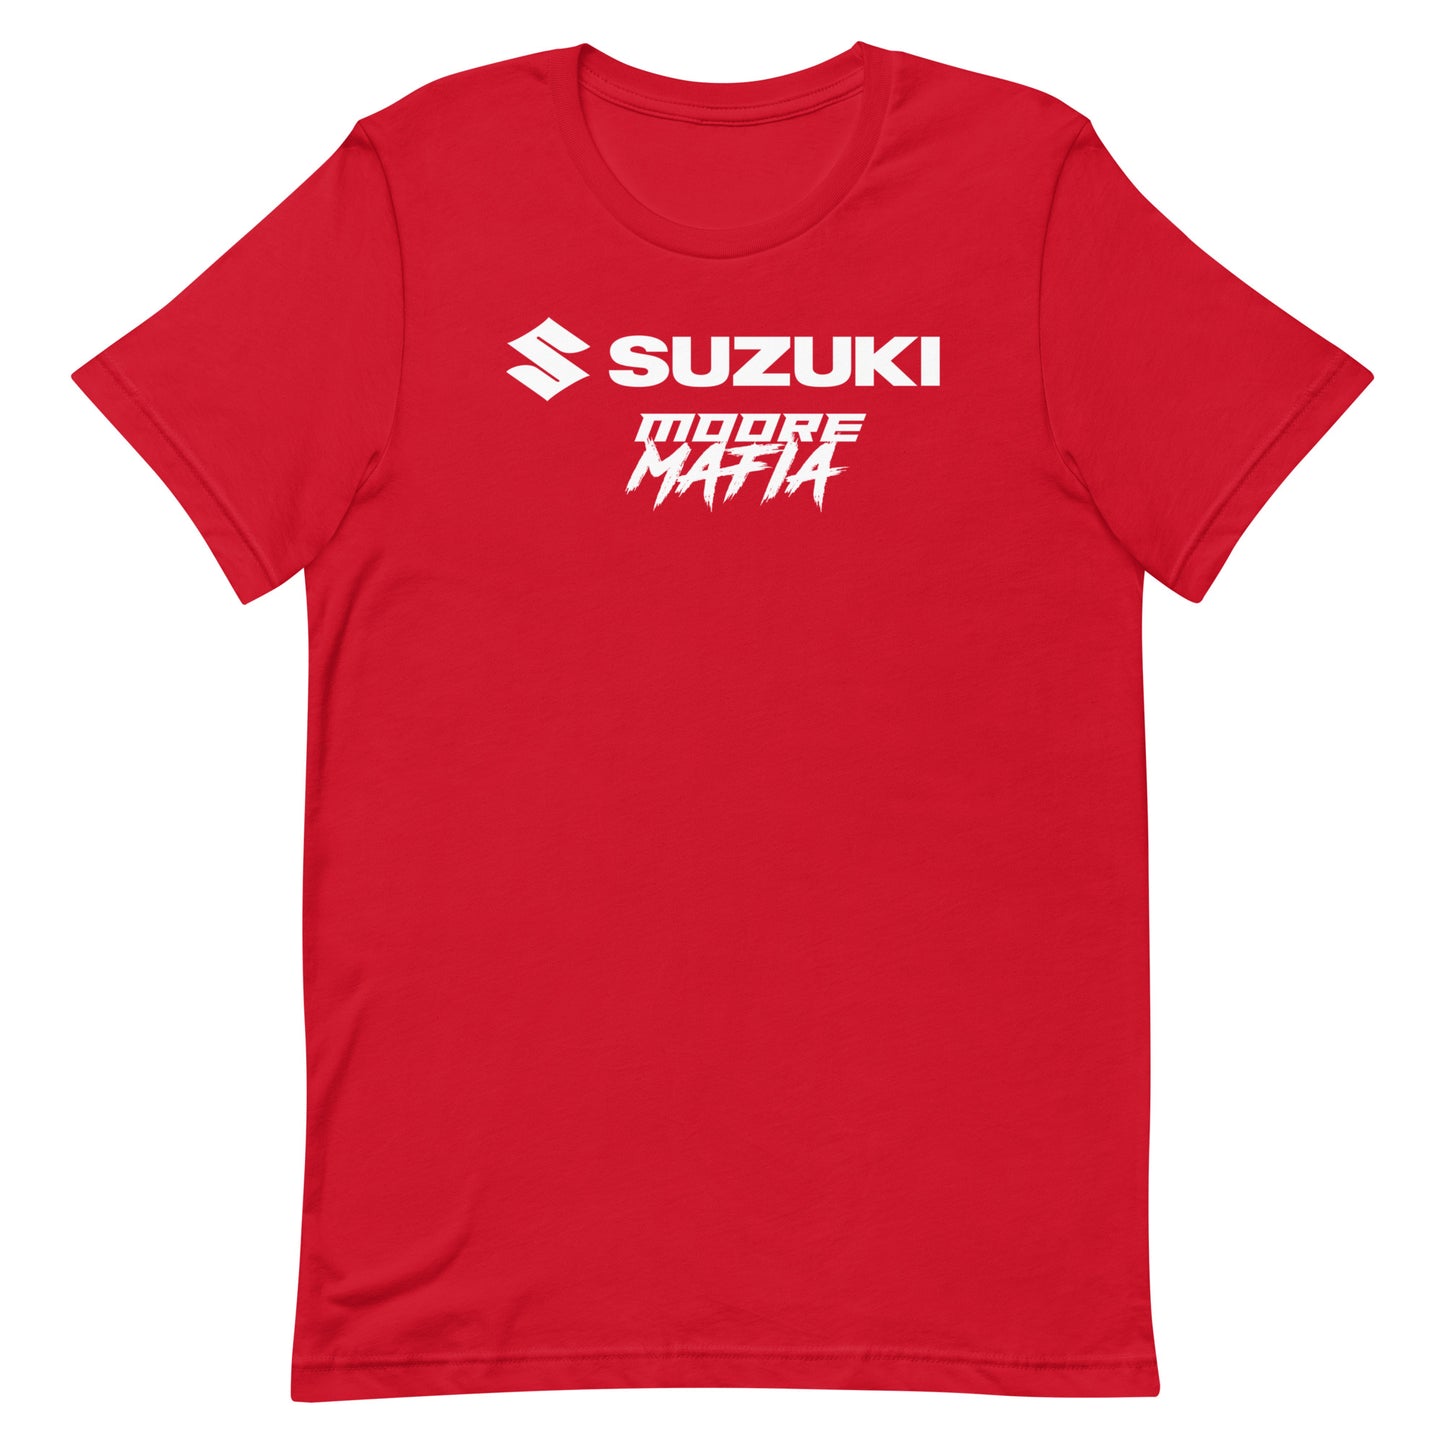 Moore Mafia Suzuzki Unisex T-shirt